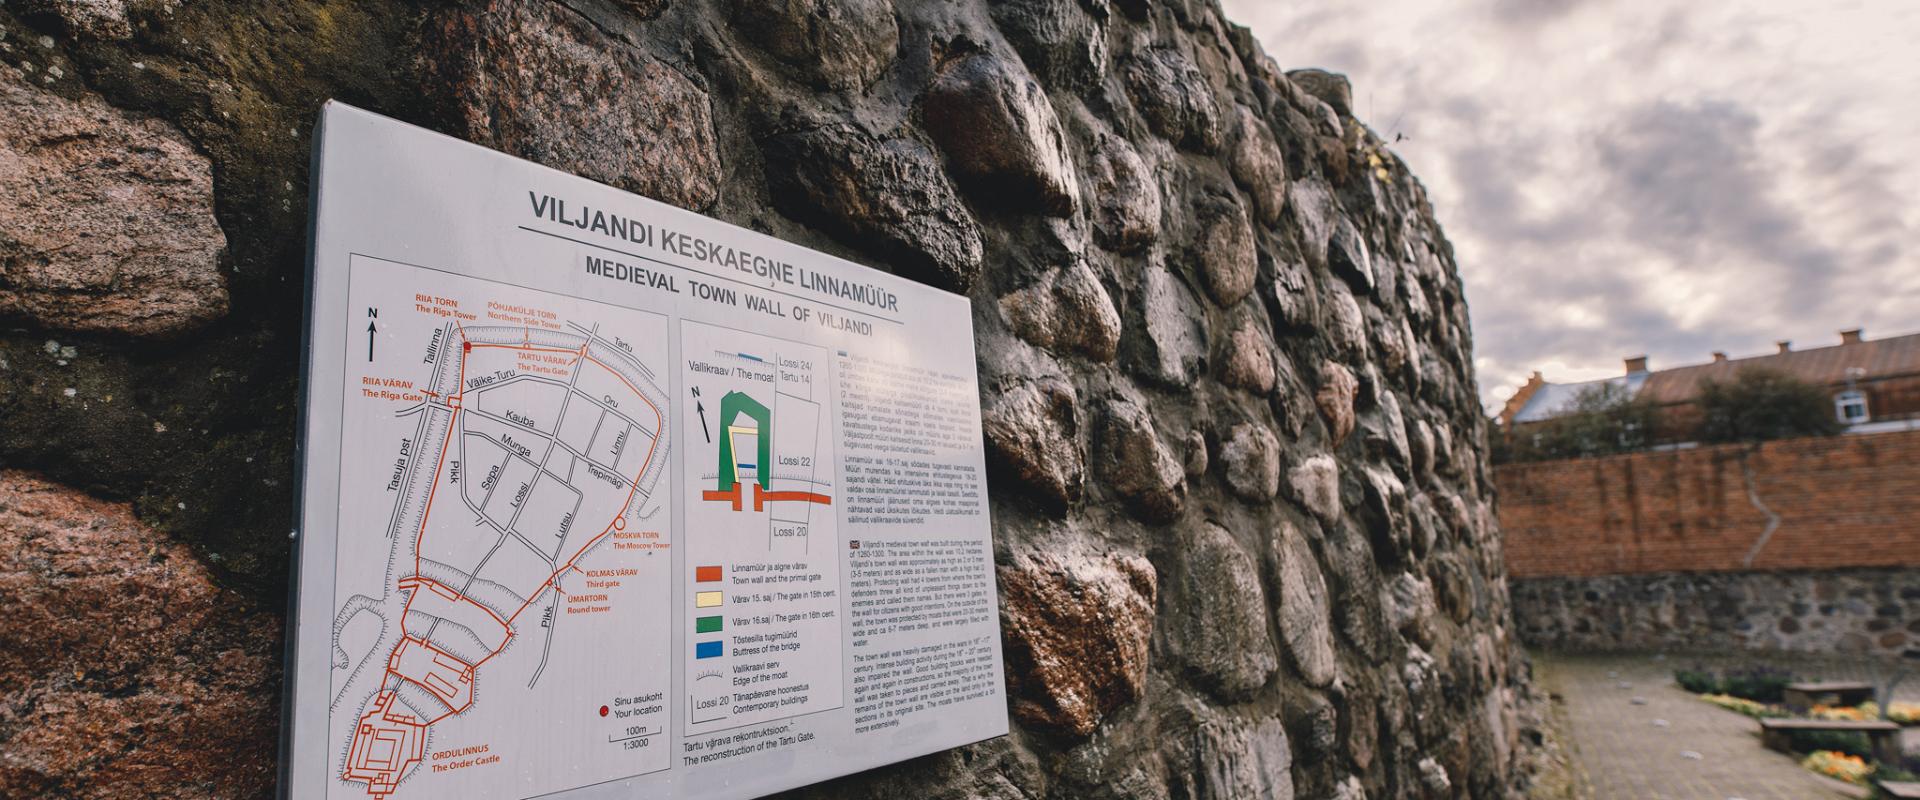 Viljandi medieval city wall